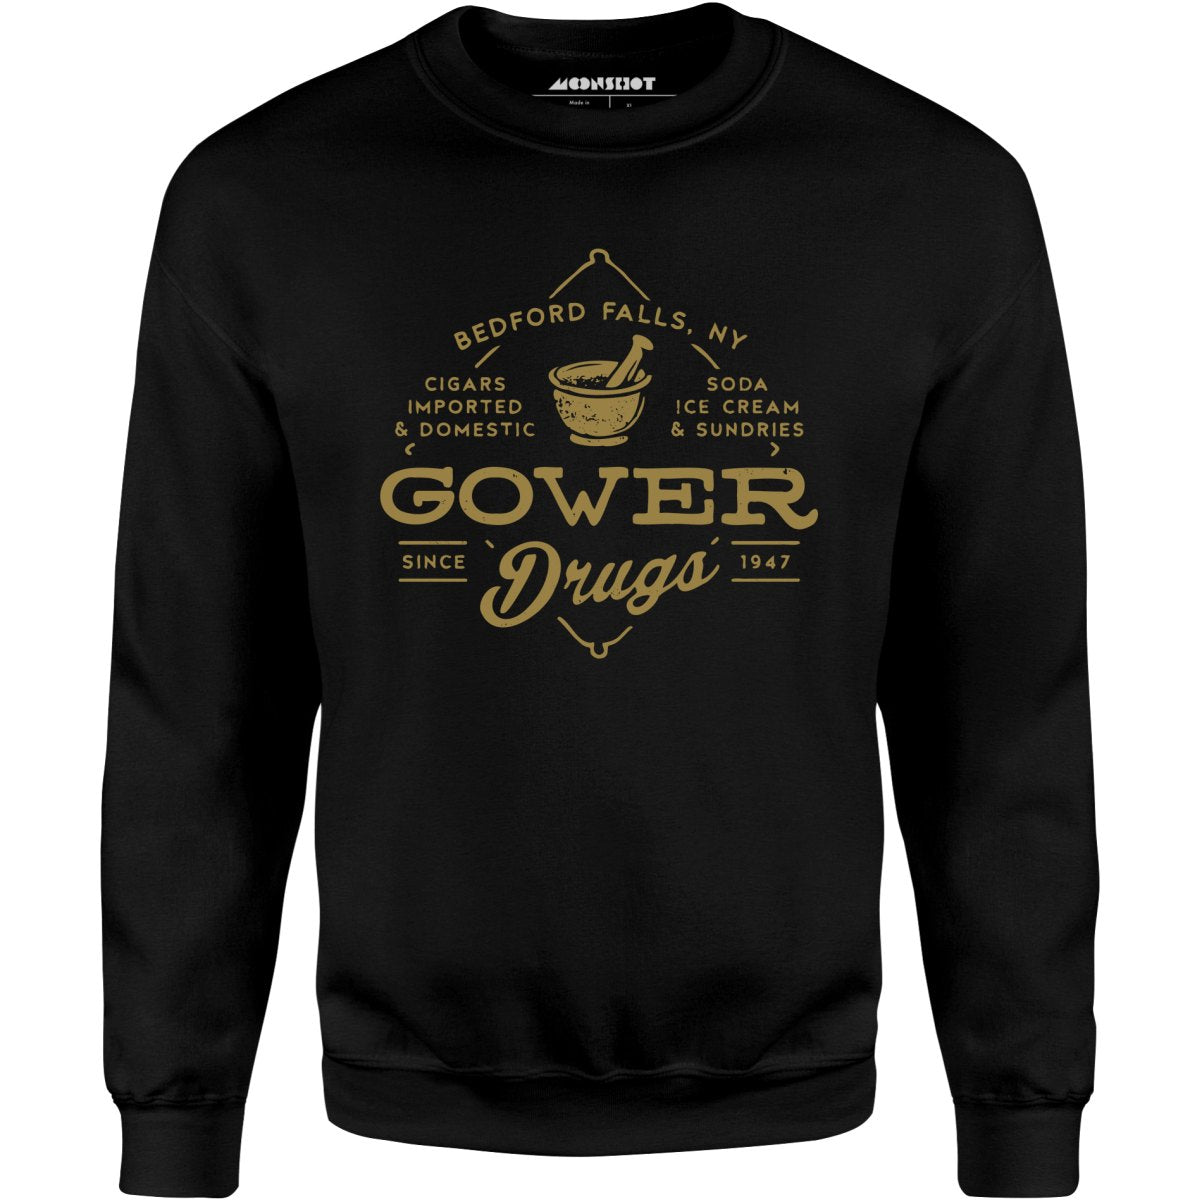 Gower Drugs - Bedford Falls, NY - Unisex Sweatshirt